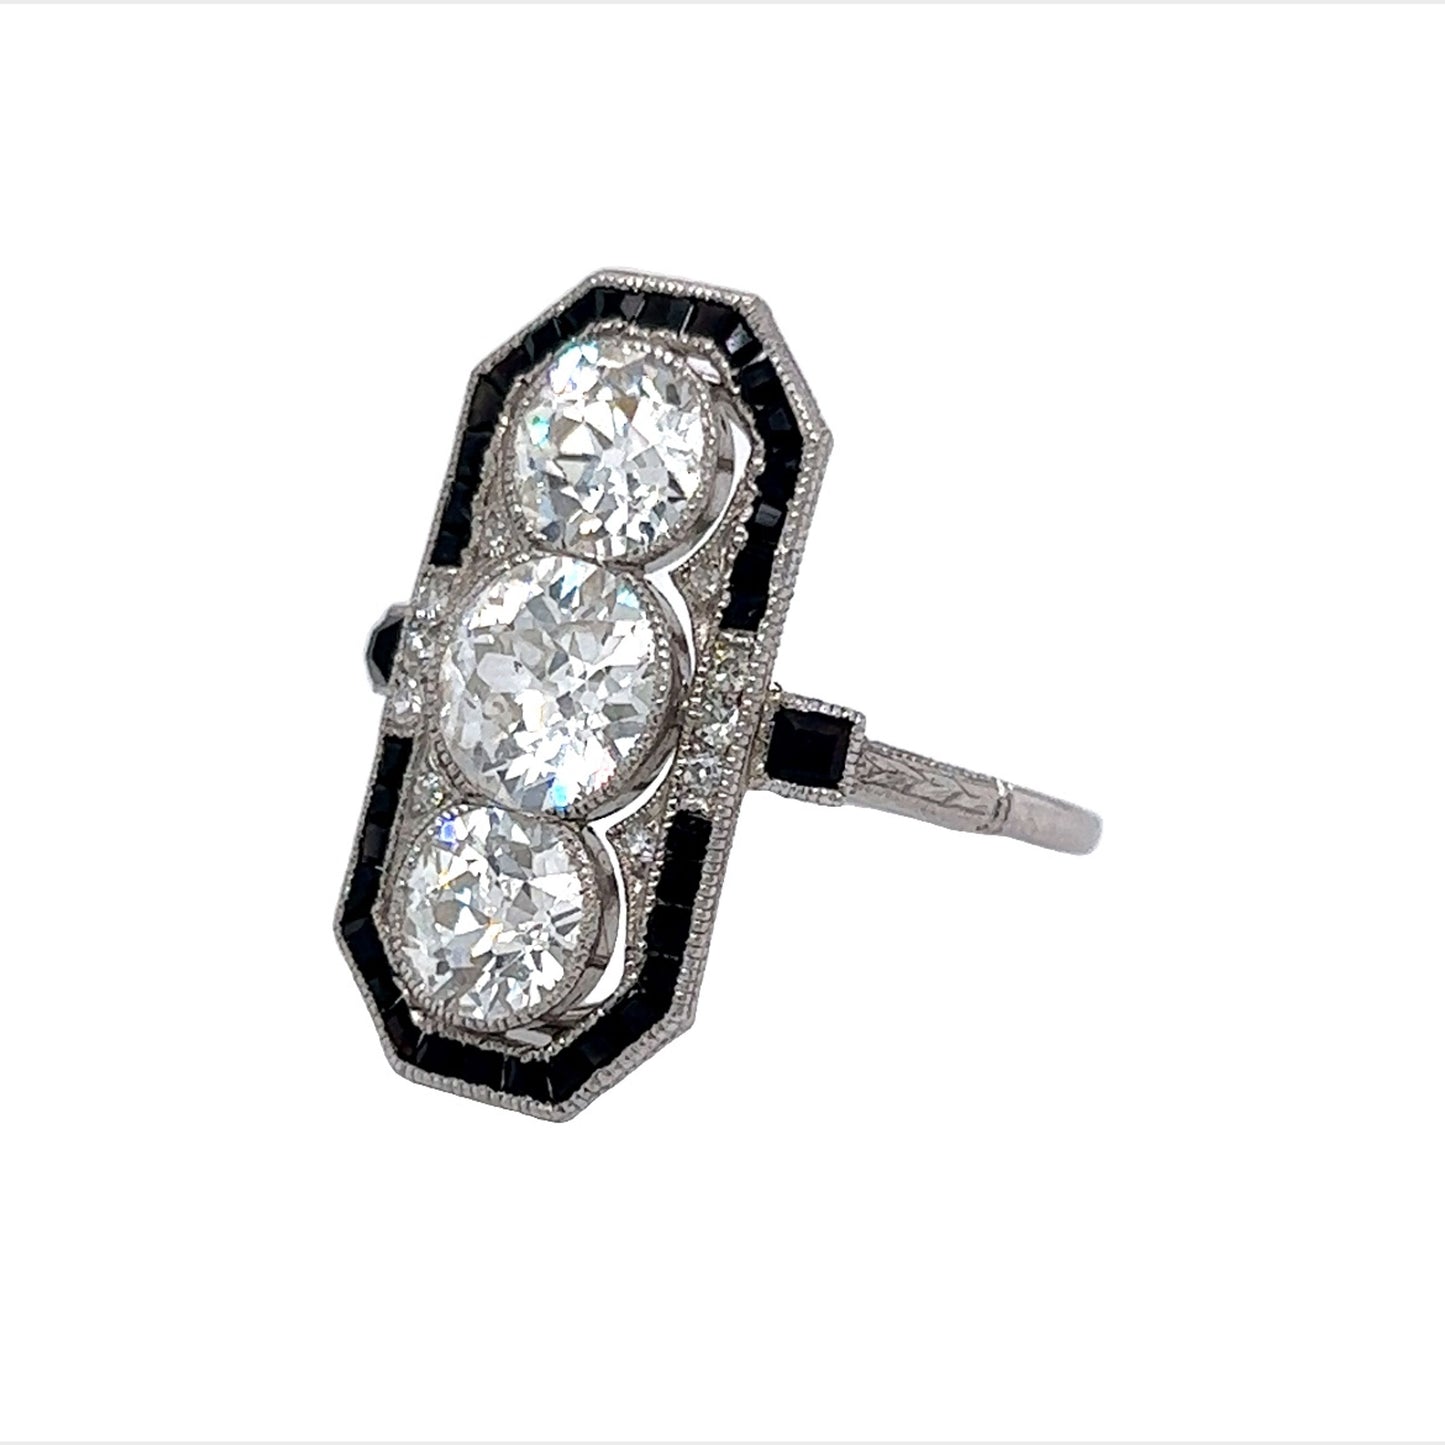 Vintage Diamond & Onyx Cocktail Ring in Platinum